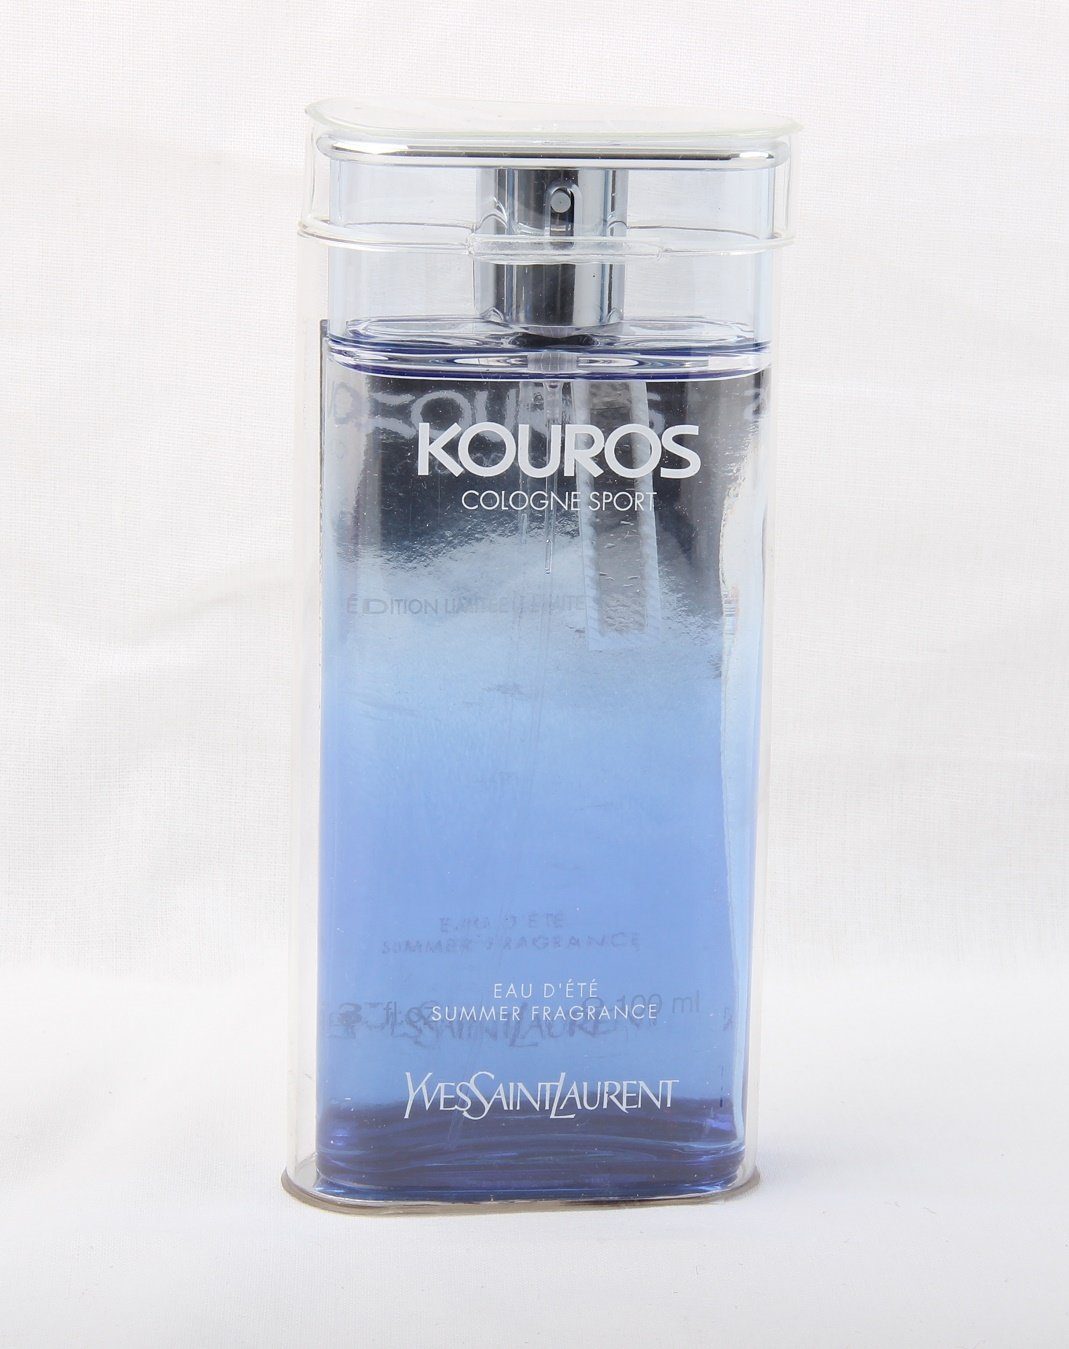 YVES SAINT LAURENT Körperspray Yves Saint Laurent KOUROS Cologne Sport Eau d Ete Summer Fragrance | Körpersprays